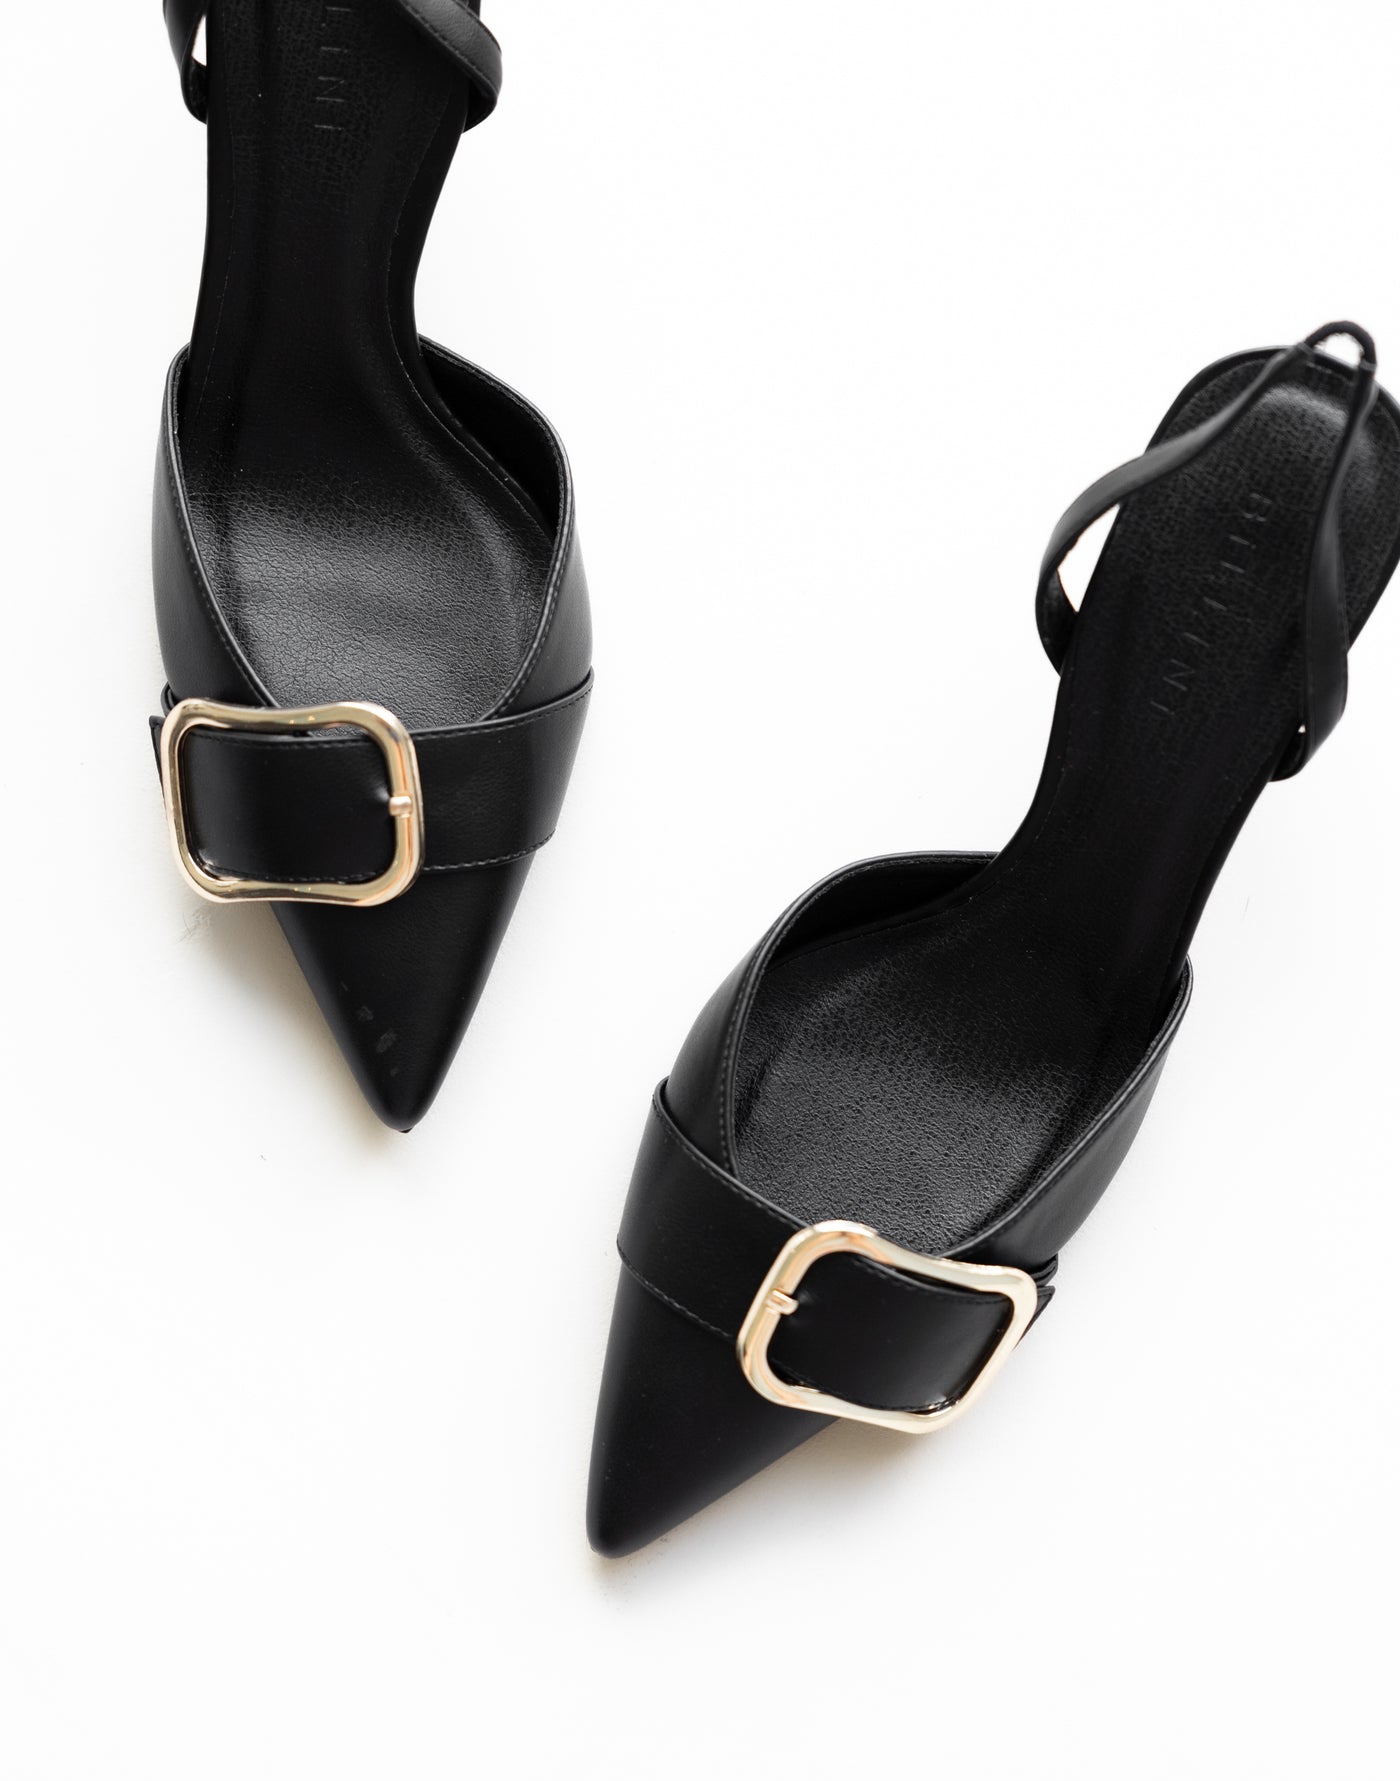 Dealani Heels (Black) - By Billini - Pointed Toe Sling Back Gold Embellishment Heel - Women's Shoes - Charcoal Clothing